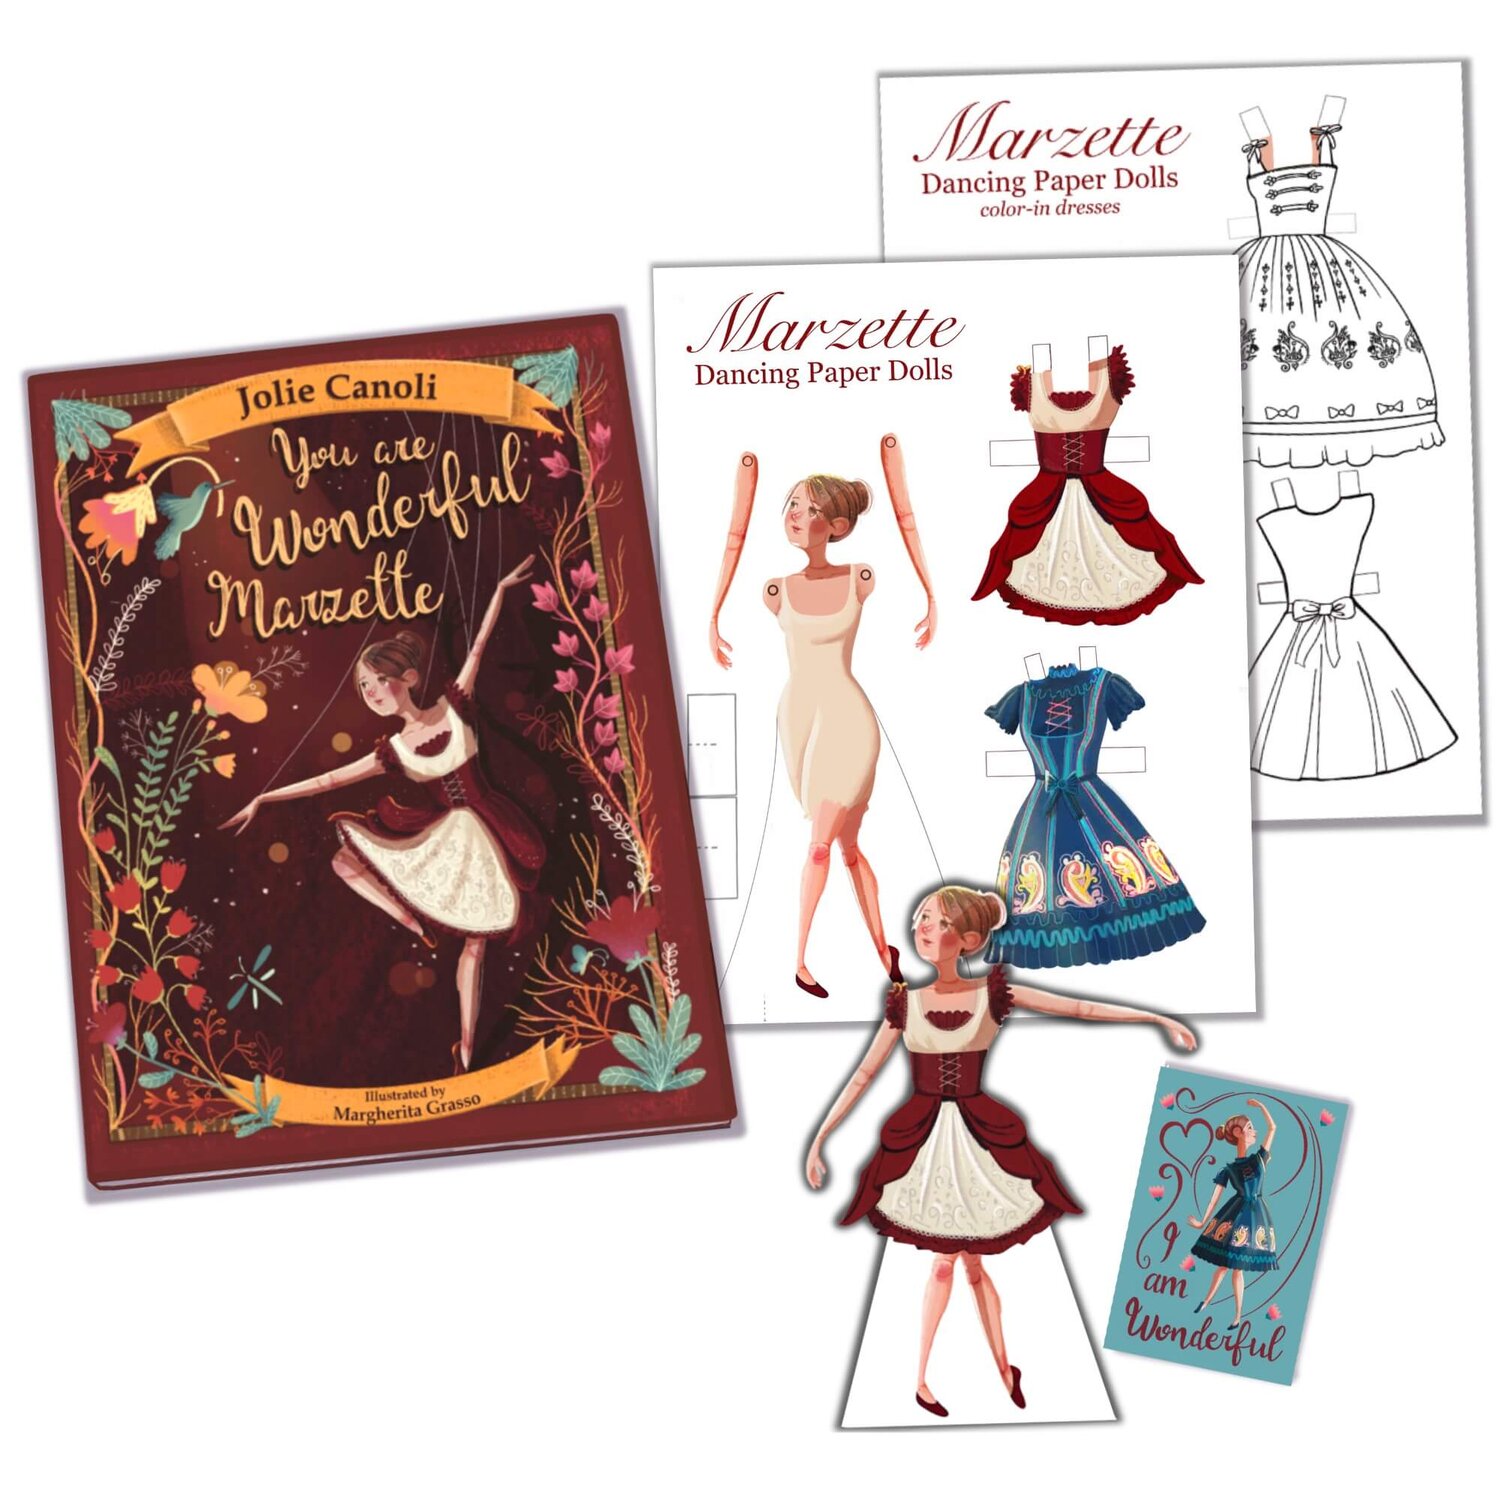 Marzette Dancing Paper Doll & Book Gift Set — Jolie Canoli